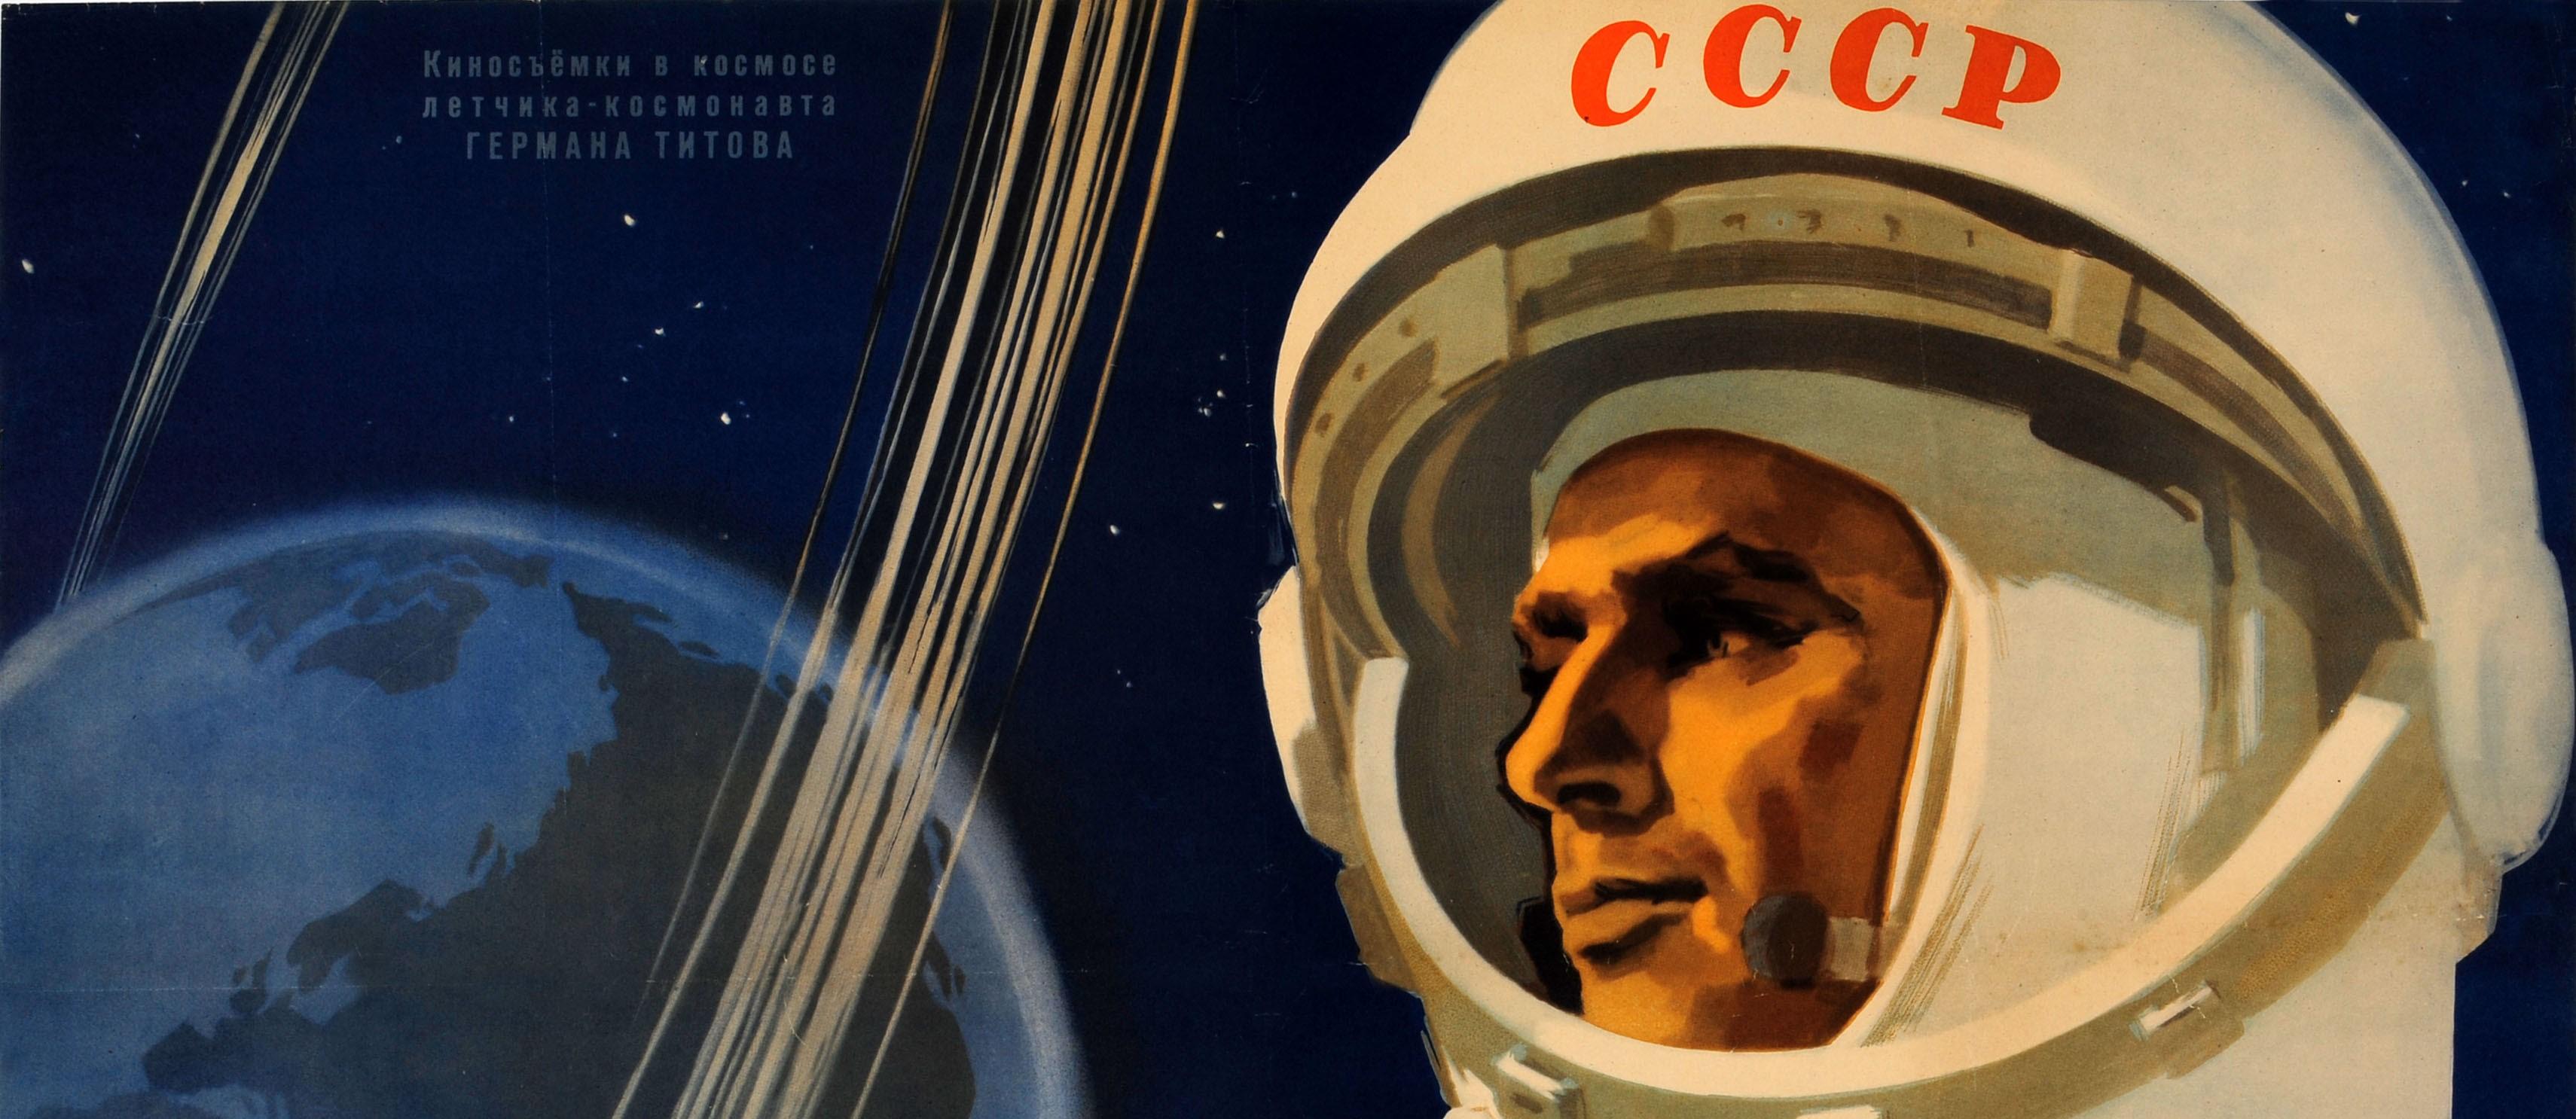 Original Vintage Soviet Space Documentary Movie Poster Cosmonaut Titov Vostok 2 - Print by Unknown